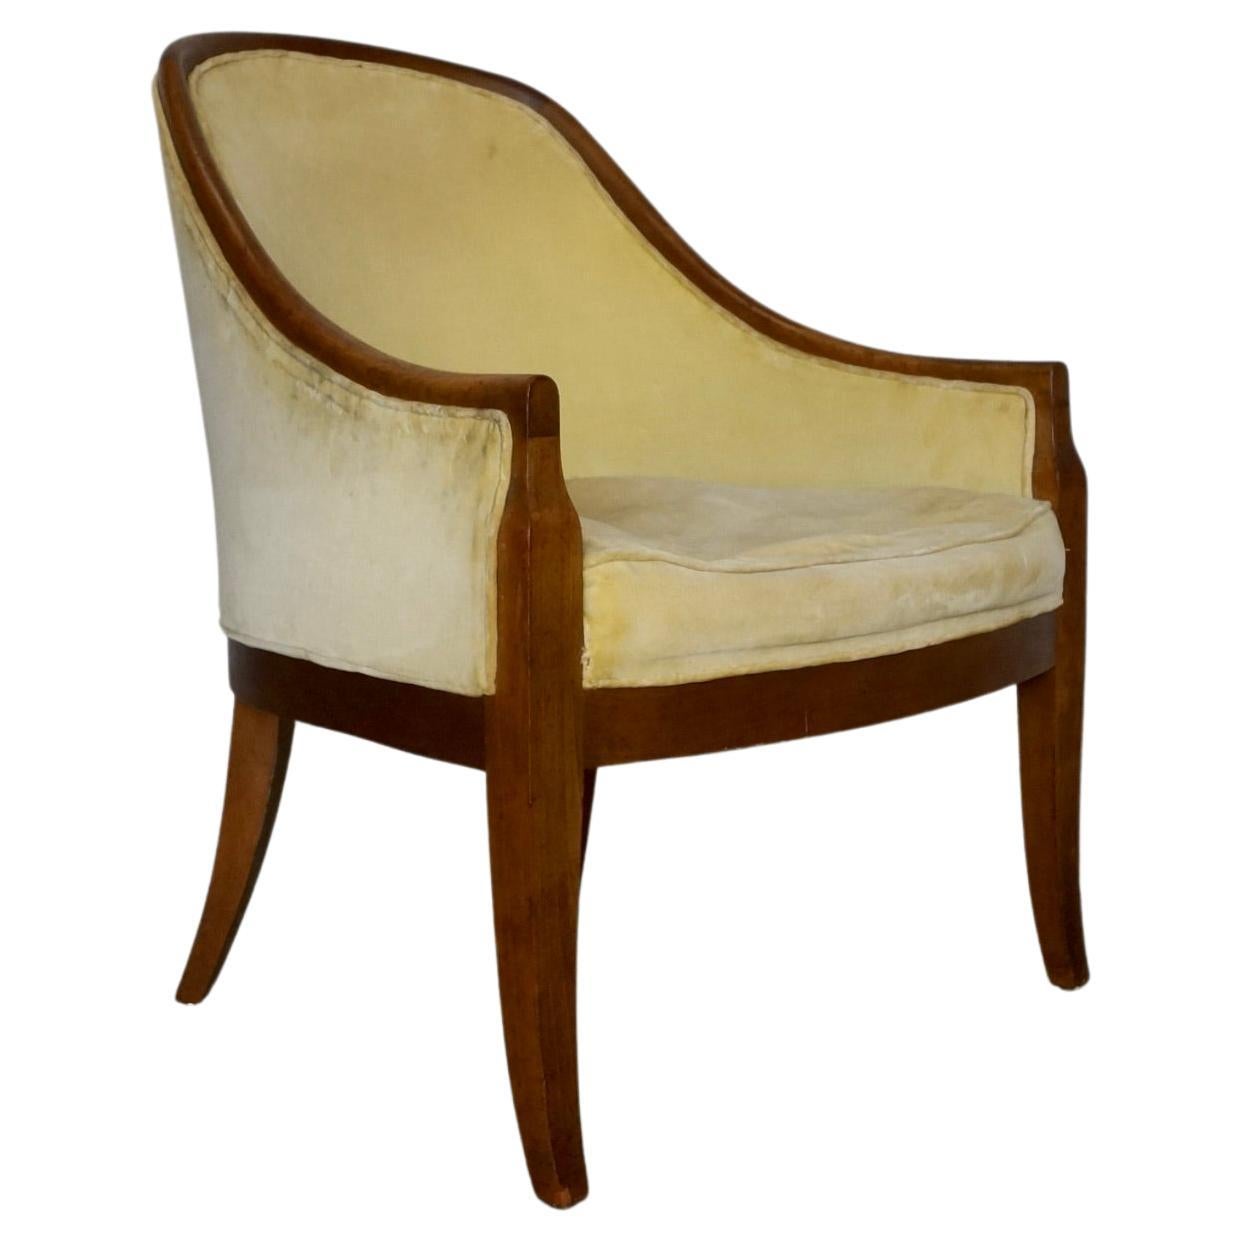 1950's Mid-Century Modern Walnut Trim Armchair For Sale